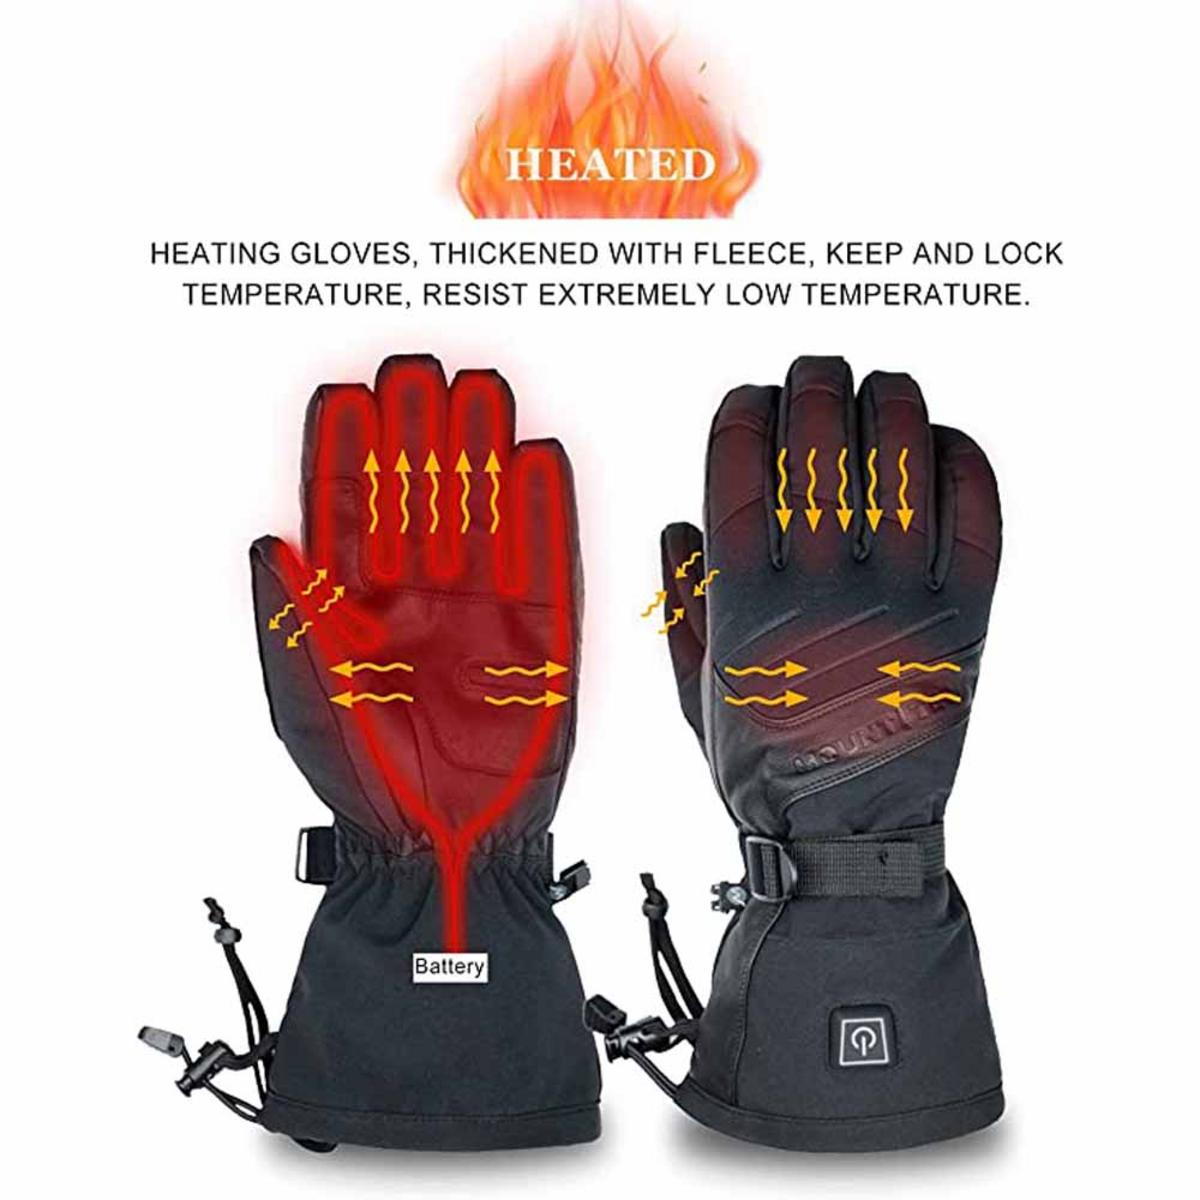 Mount Tec Explorer 3 Heated Performance Winter Gloves